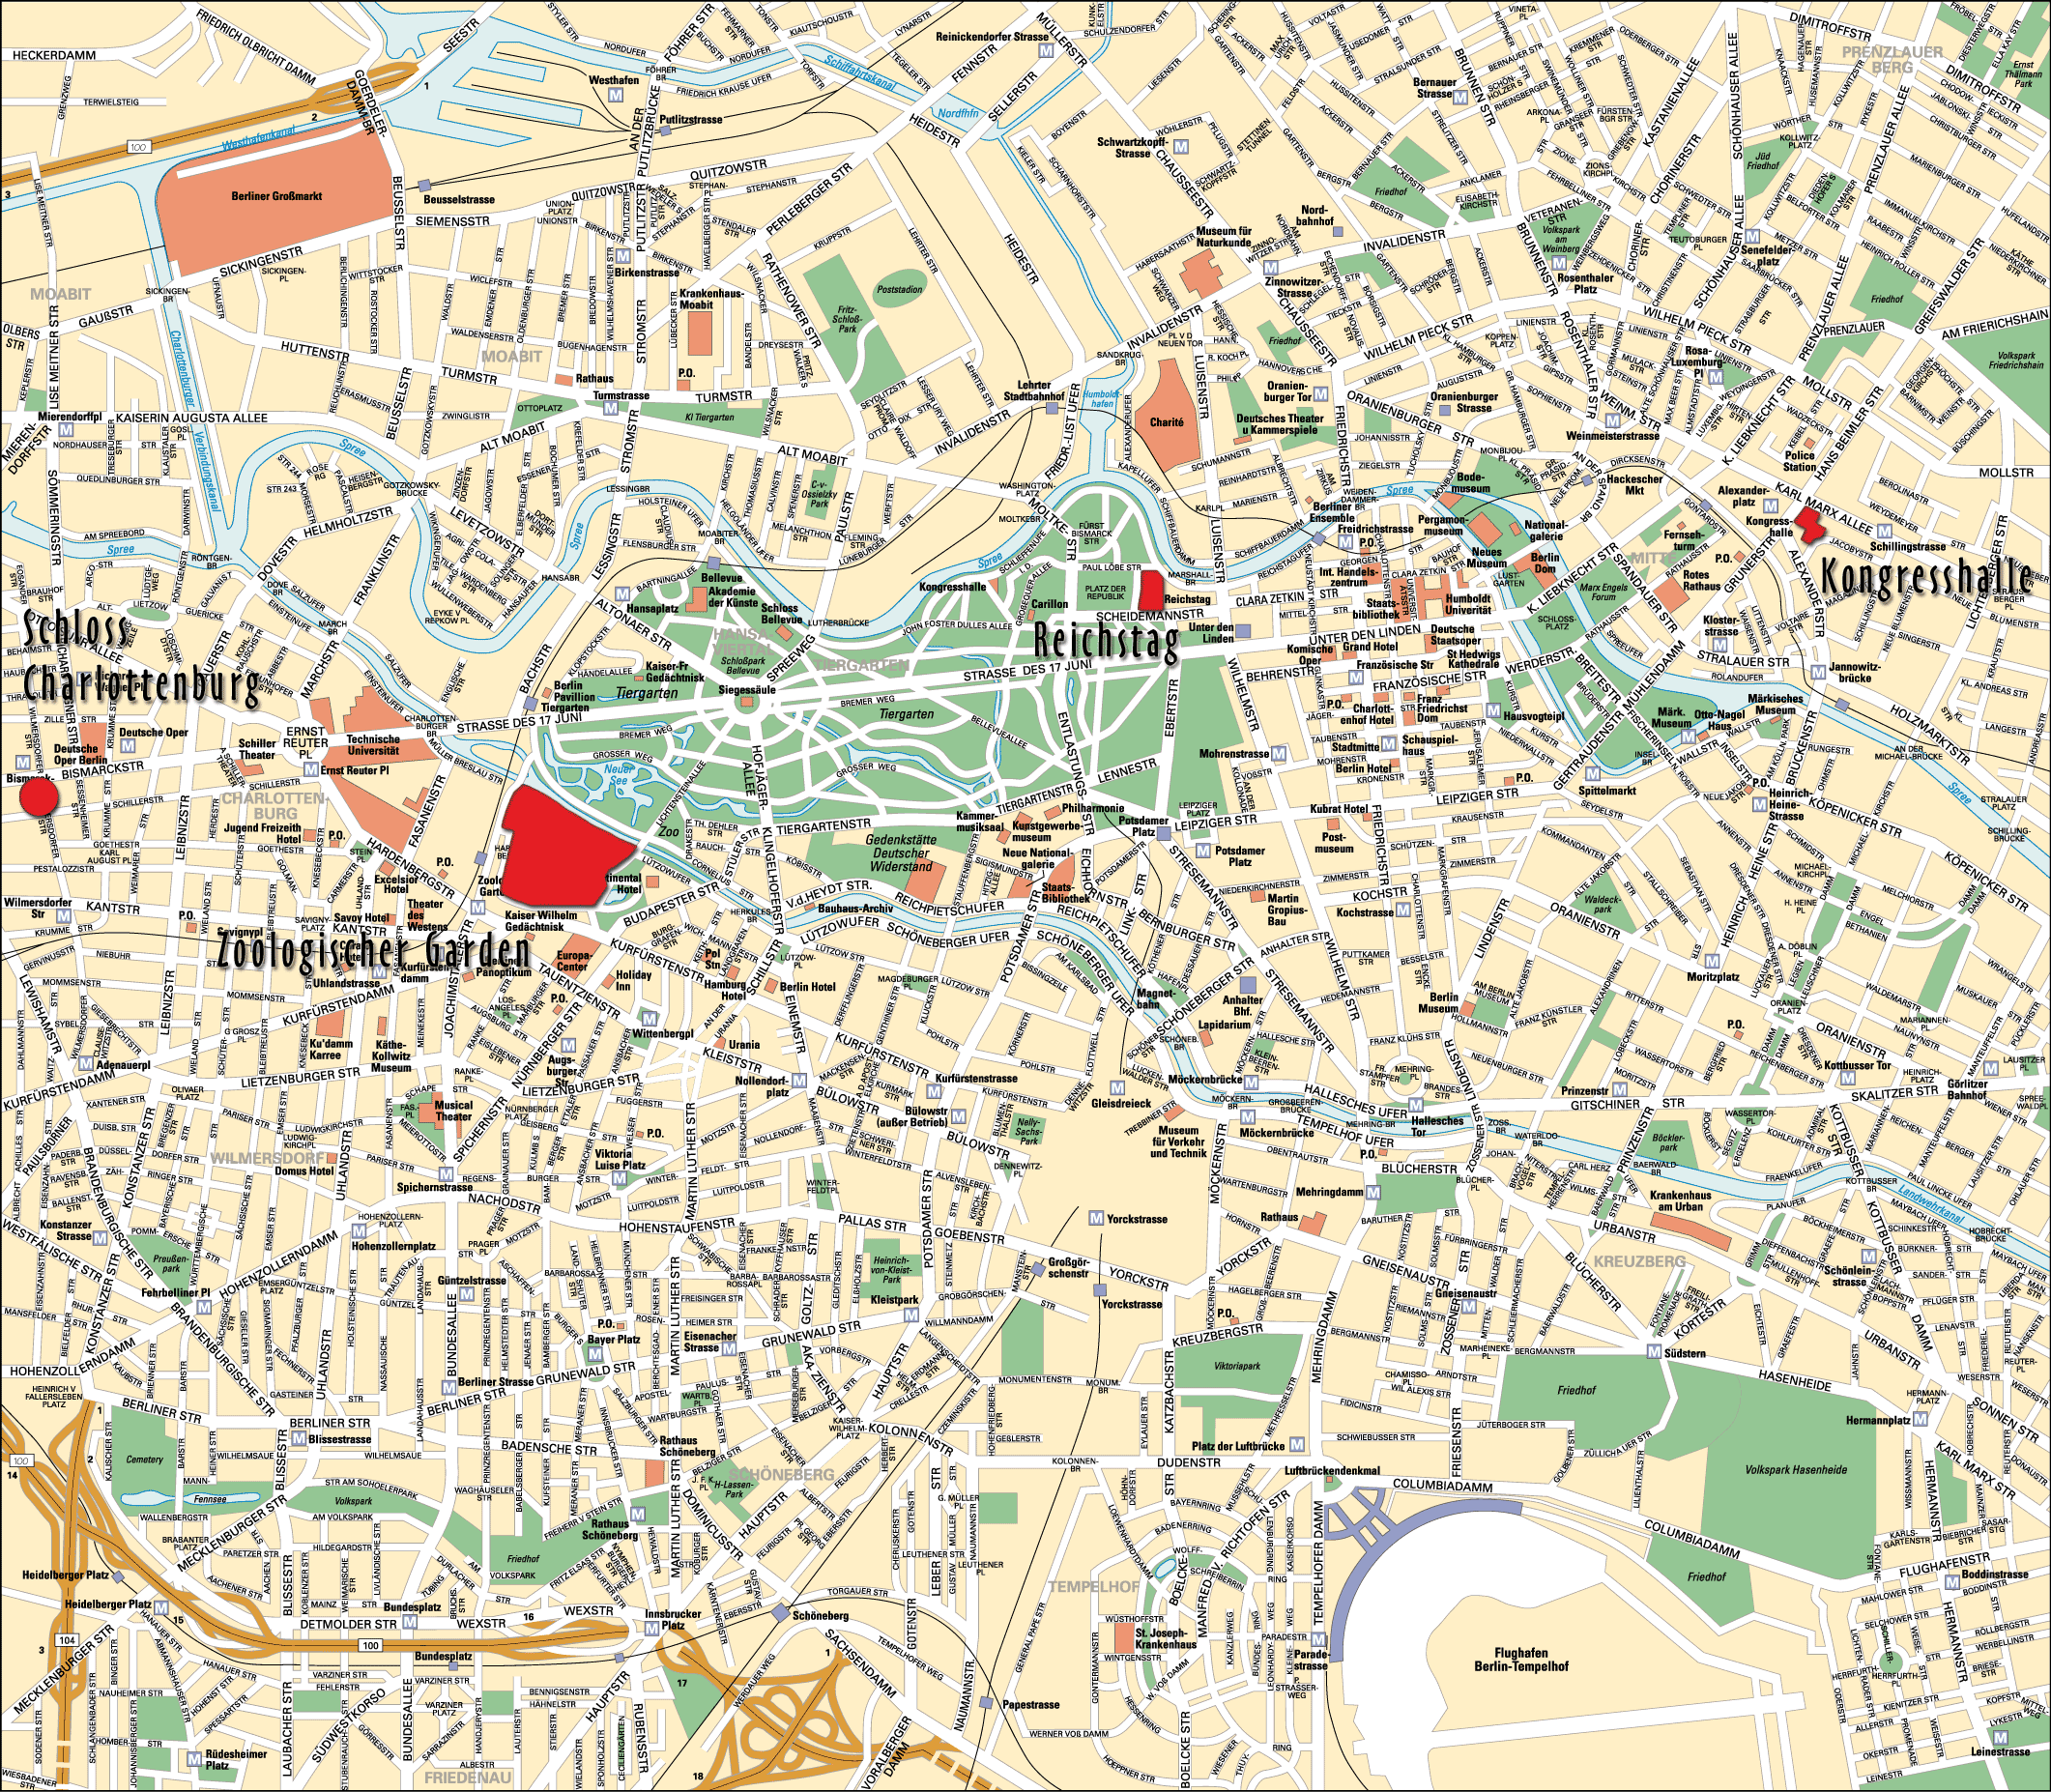 http://www.orangesmile.com/destinations/img/berlin-map-big.gif